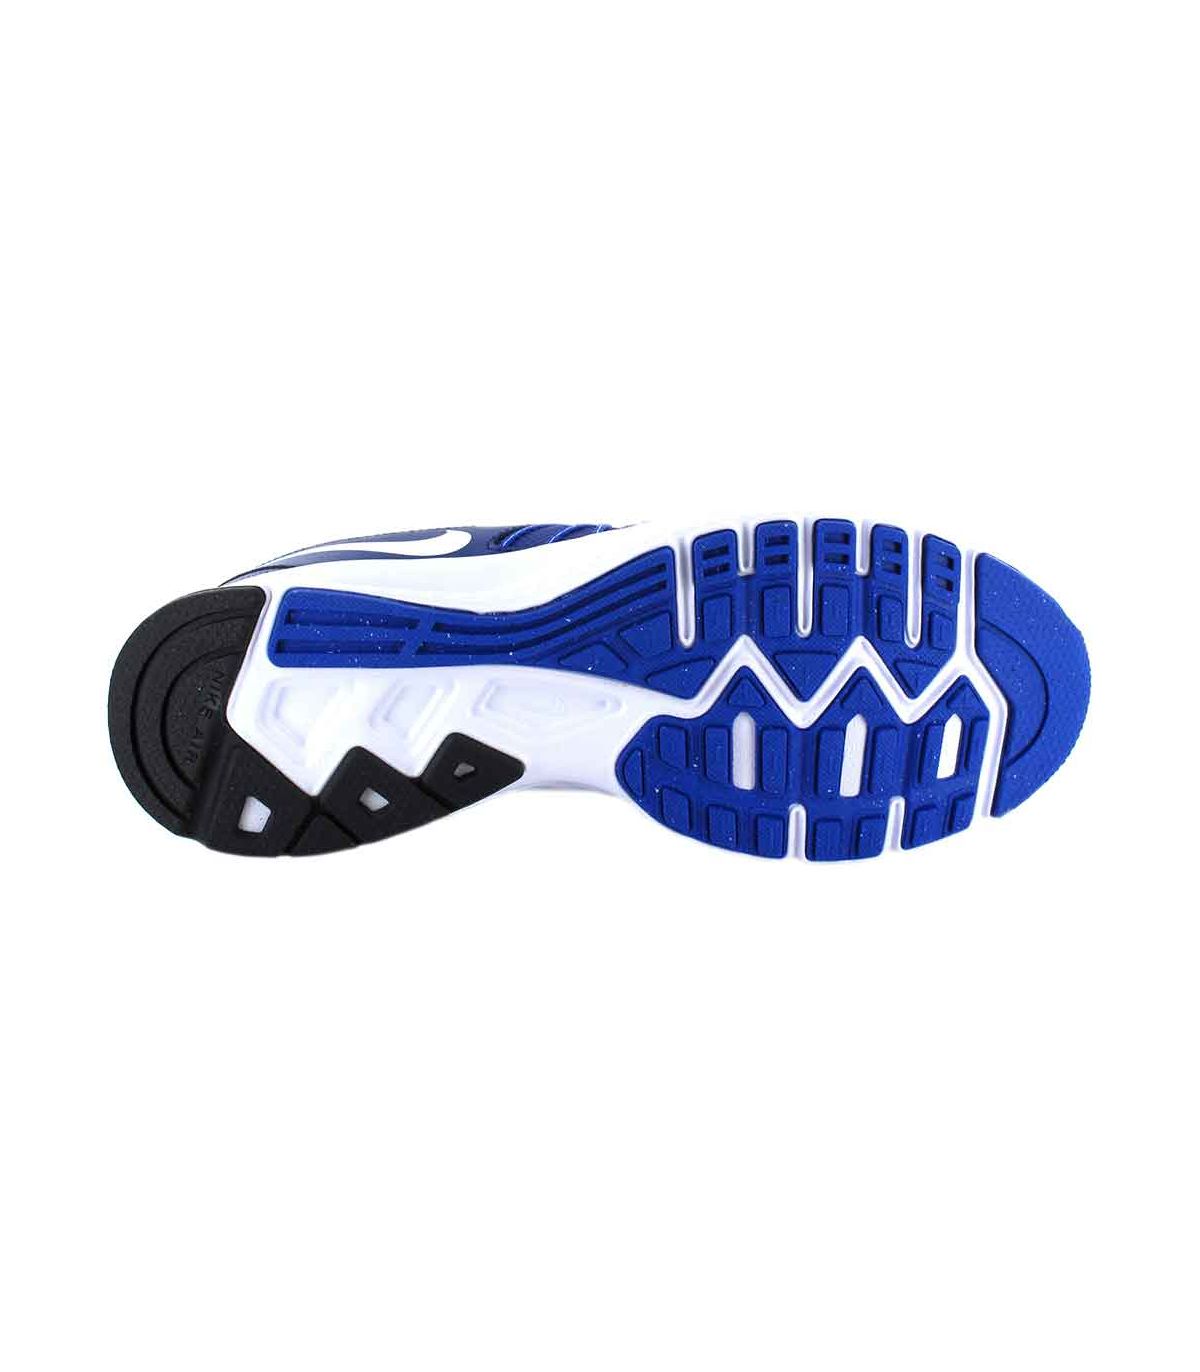 Discrepancia recoger Gracias ➤Nike Air Relentless 6 Azul - Zapatillas Running Hombre l SoloRunning.com